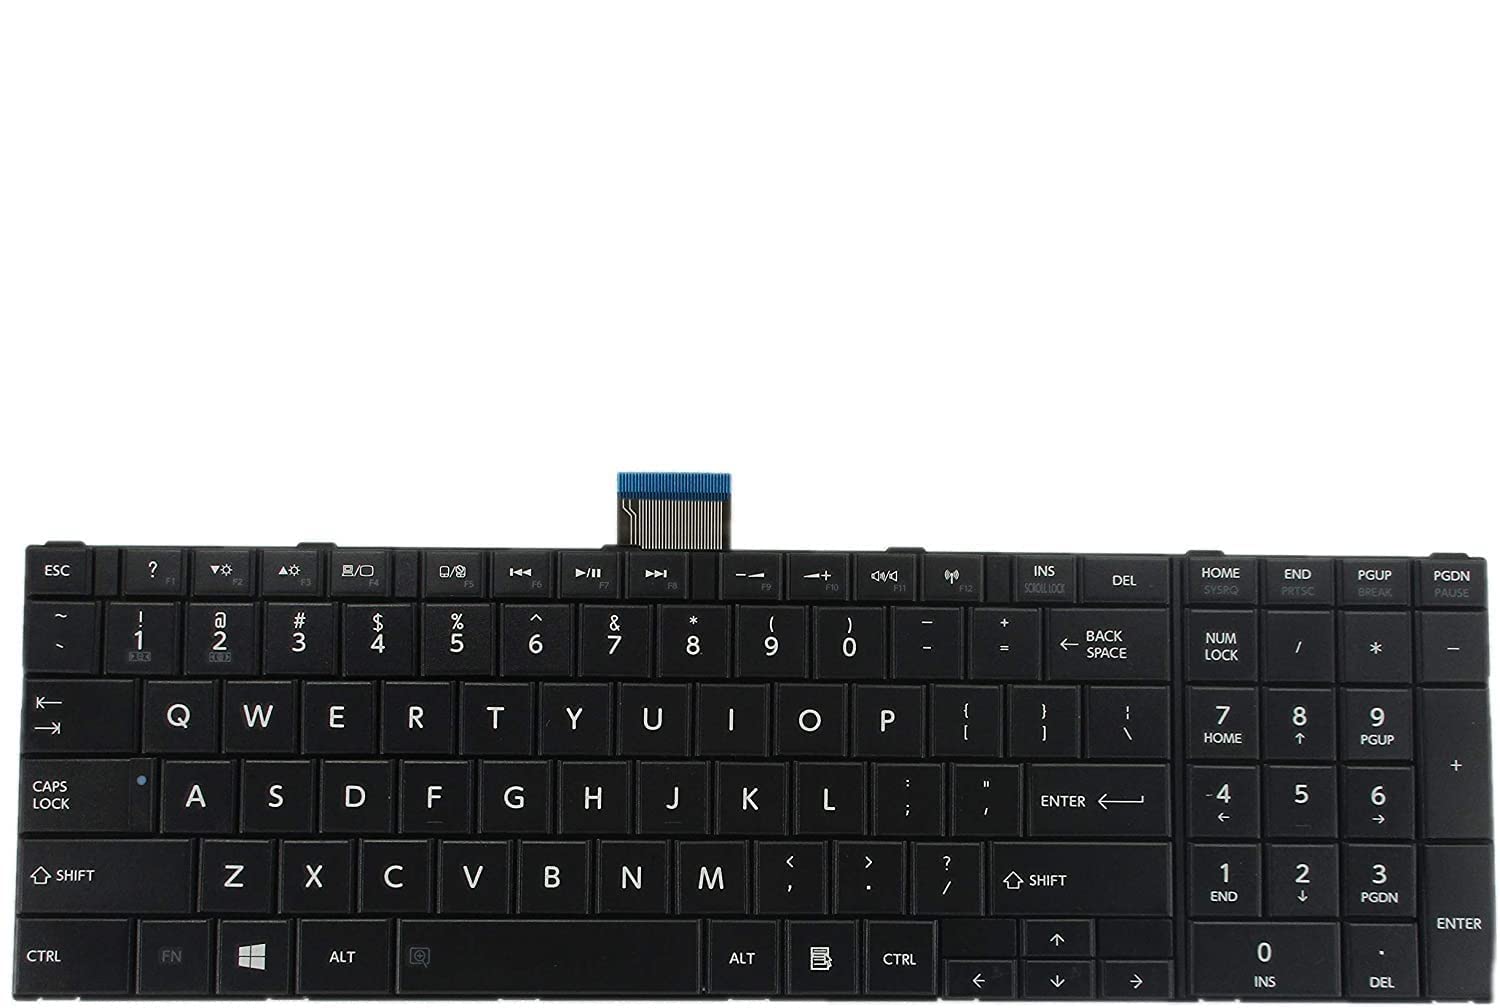 WISTAR Laptop Keyboard Compatible for Toshiba Satilite C50, C55, L50 Series C50-A-01T, C50D-A-023, C50-A-0JR, C50-A-0JT Part No. NSK-VA0SC, PK1315H1A00, V143026CS1, 132412258